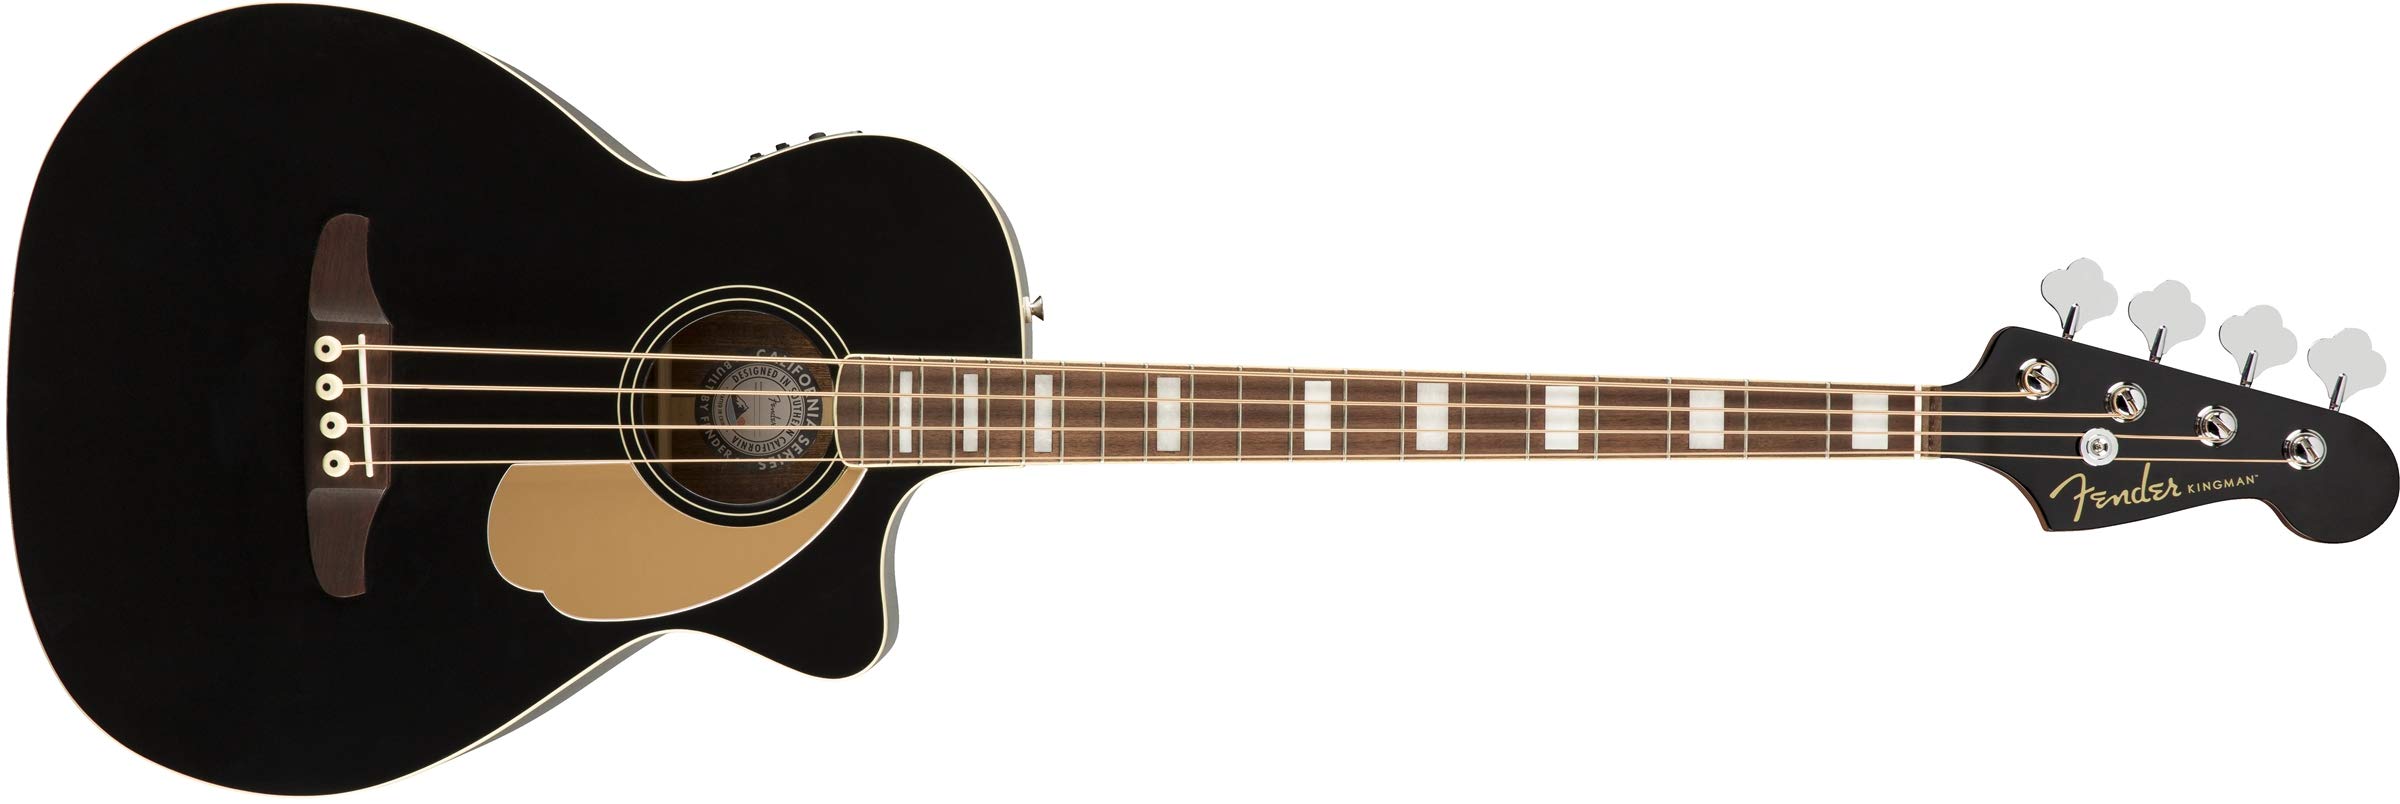 Fender Kingman 어쿠스틱 베이스 기타(V2) - 블랙 - 가방 포함 - 월넛 지판